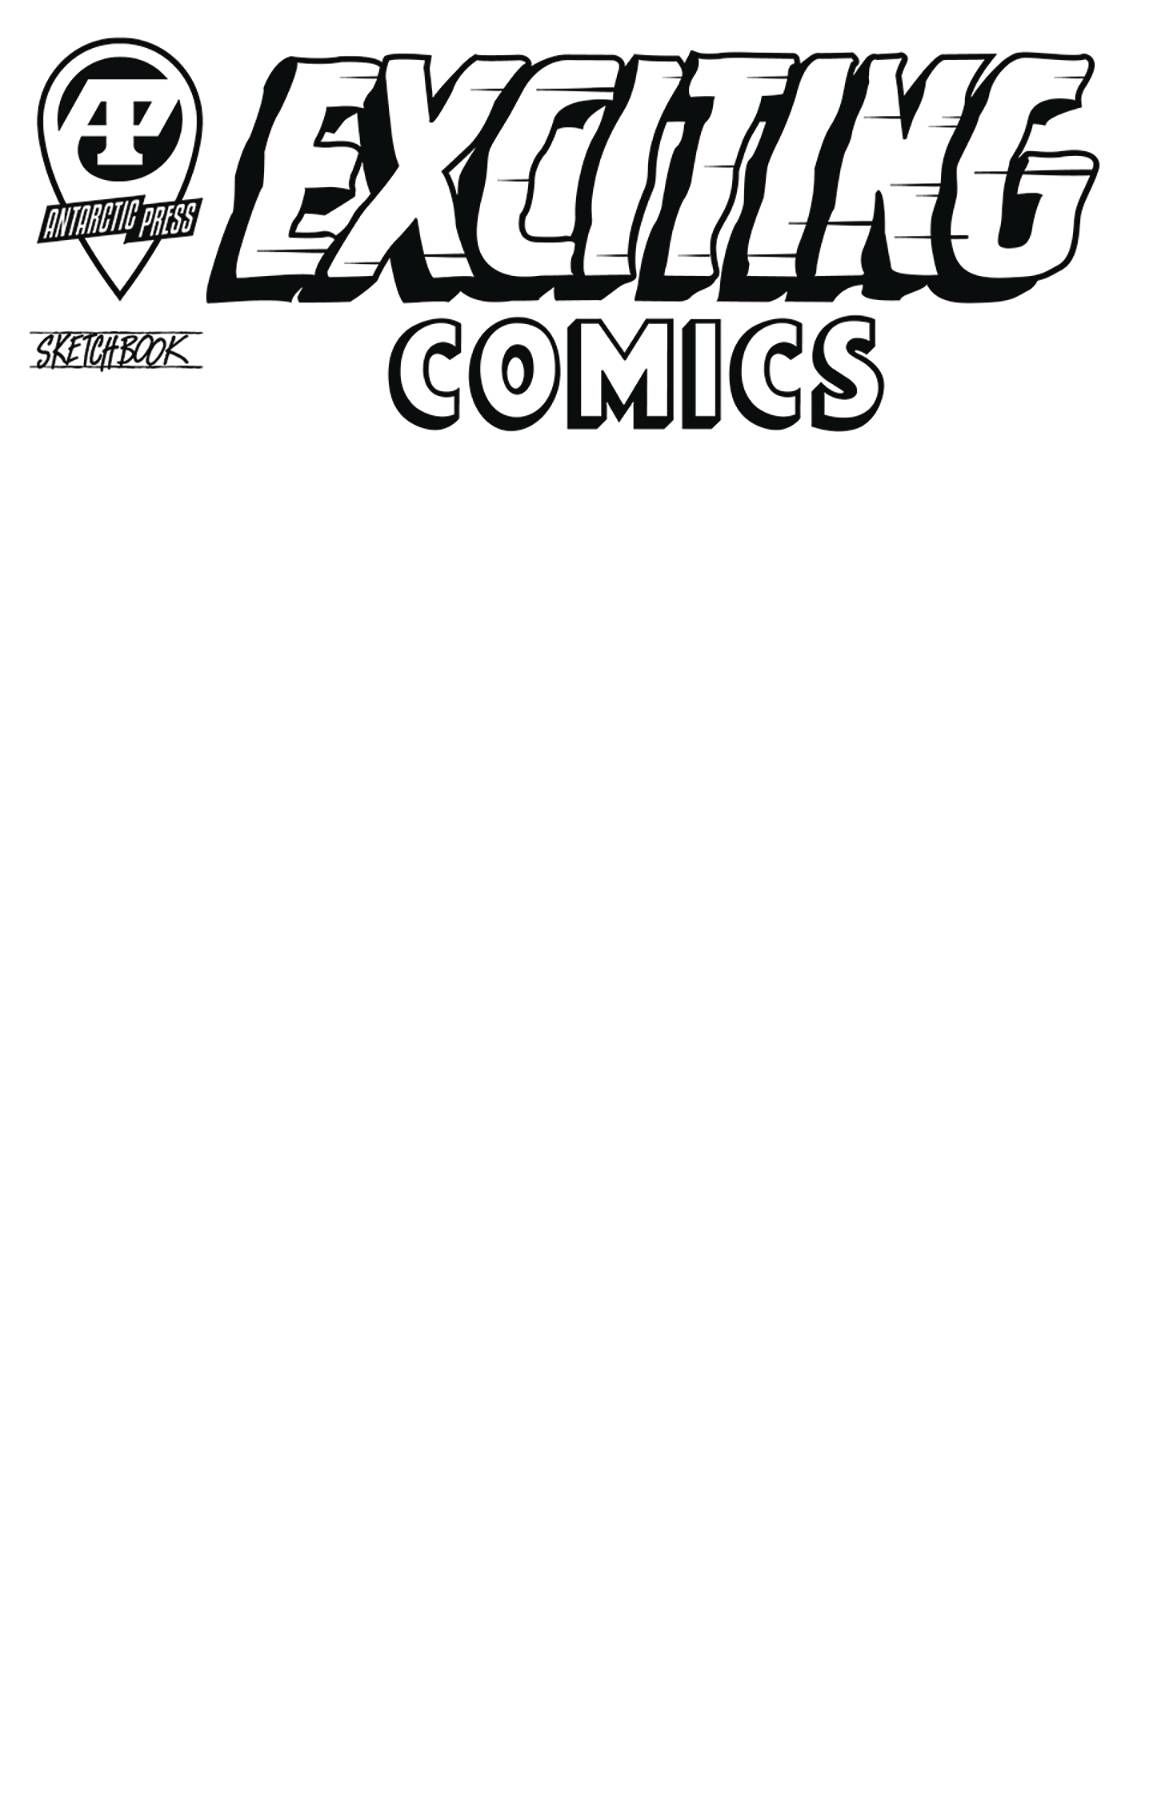 Exciting Comics Sketchbook #nn Comic